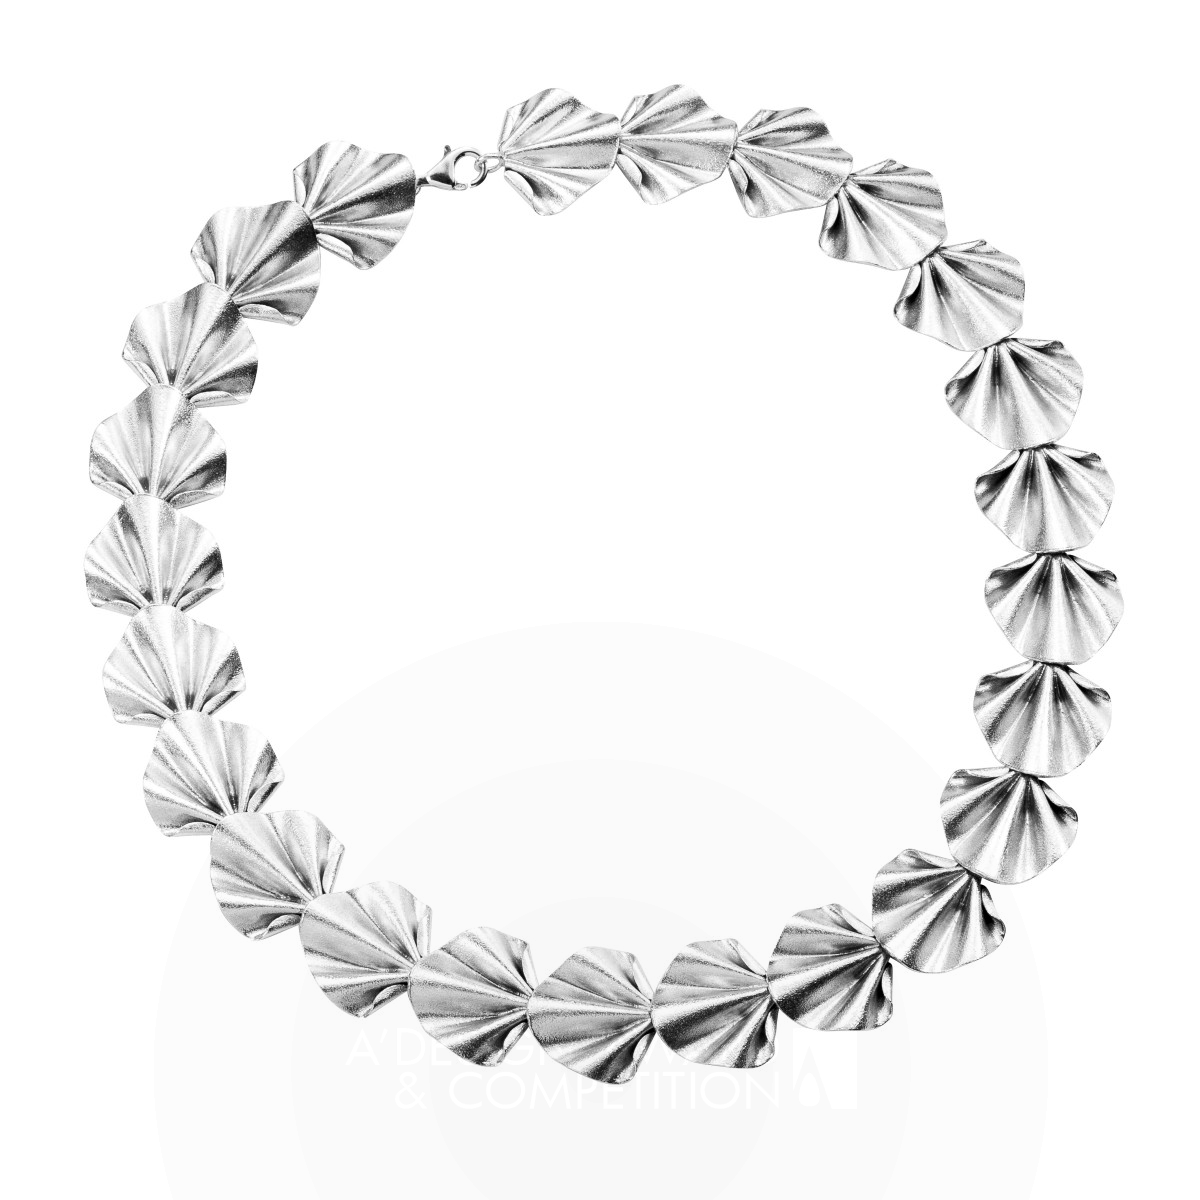 Anna-Reetta Väänänen wins Silver at the prestigious A' Jewelry Design Award with Waves Necklace.